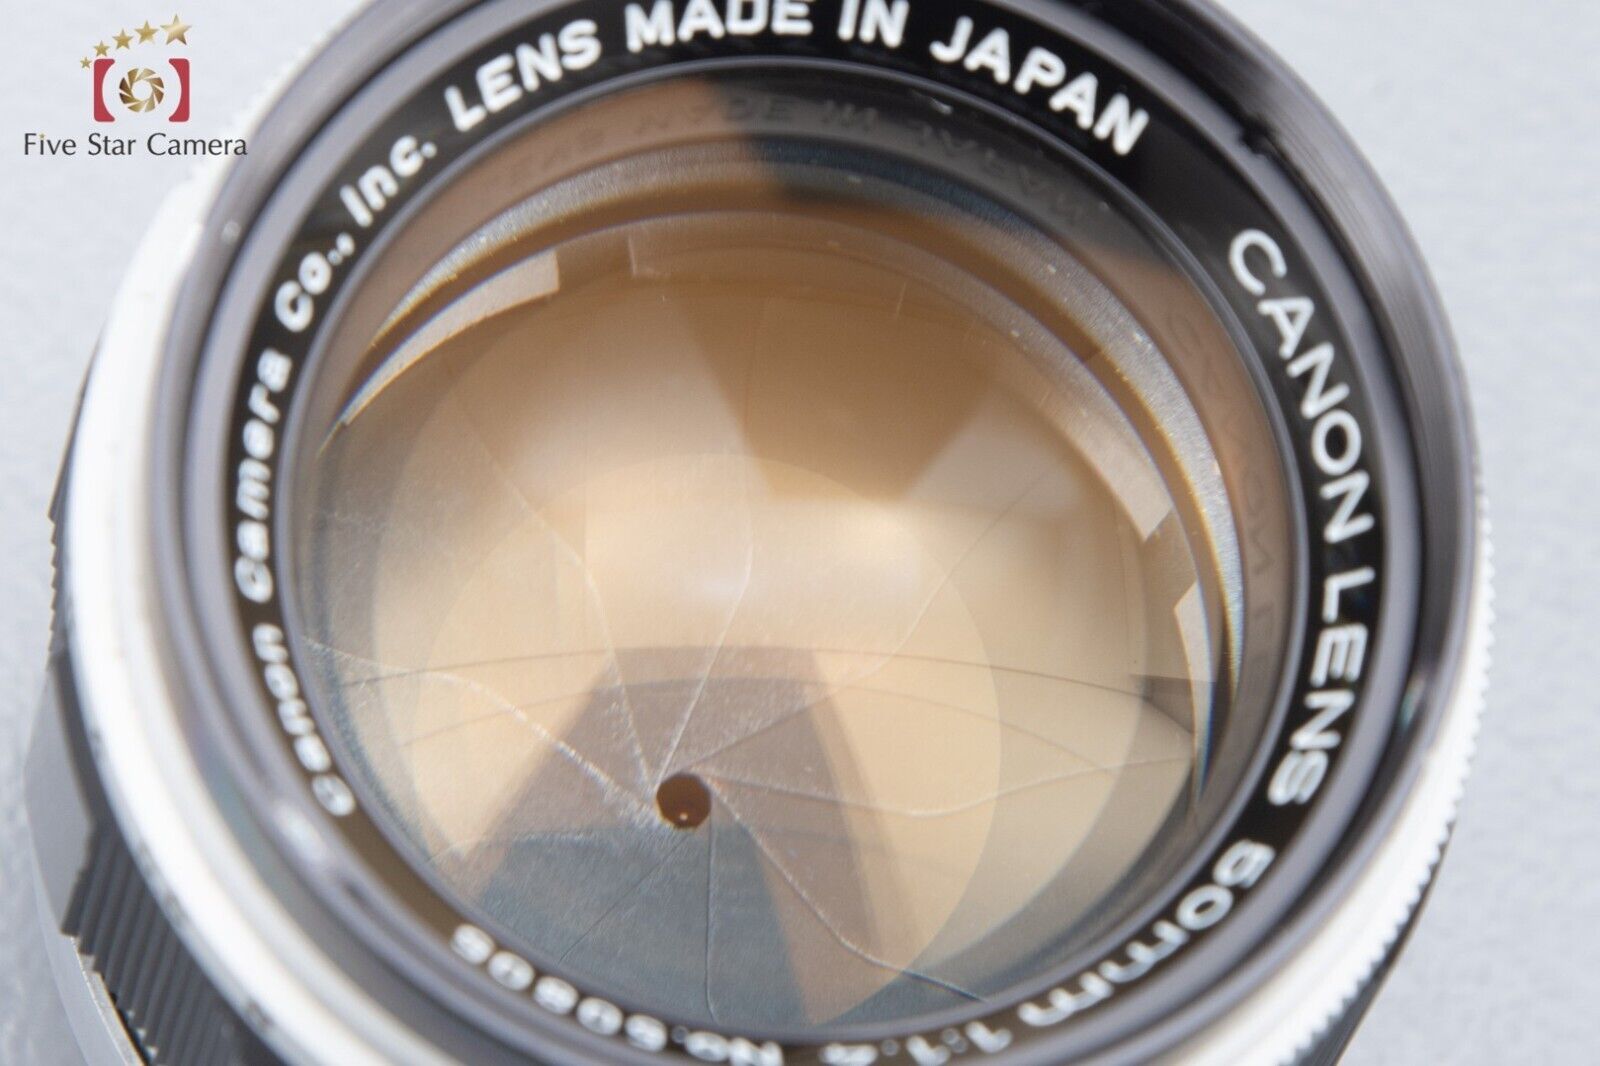 Very Good!! Canon 50mm f/1.4 L39 Leica Thread Mount Lens